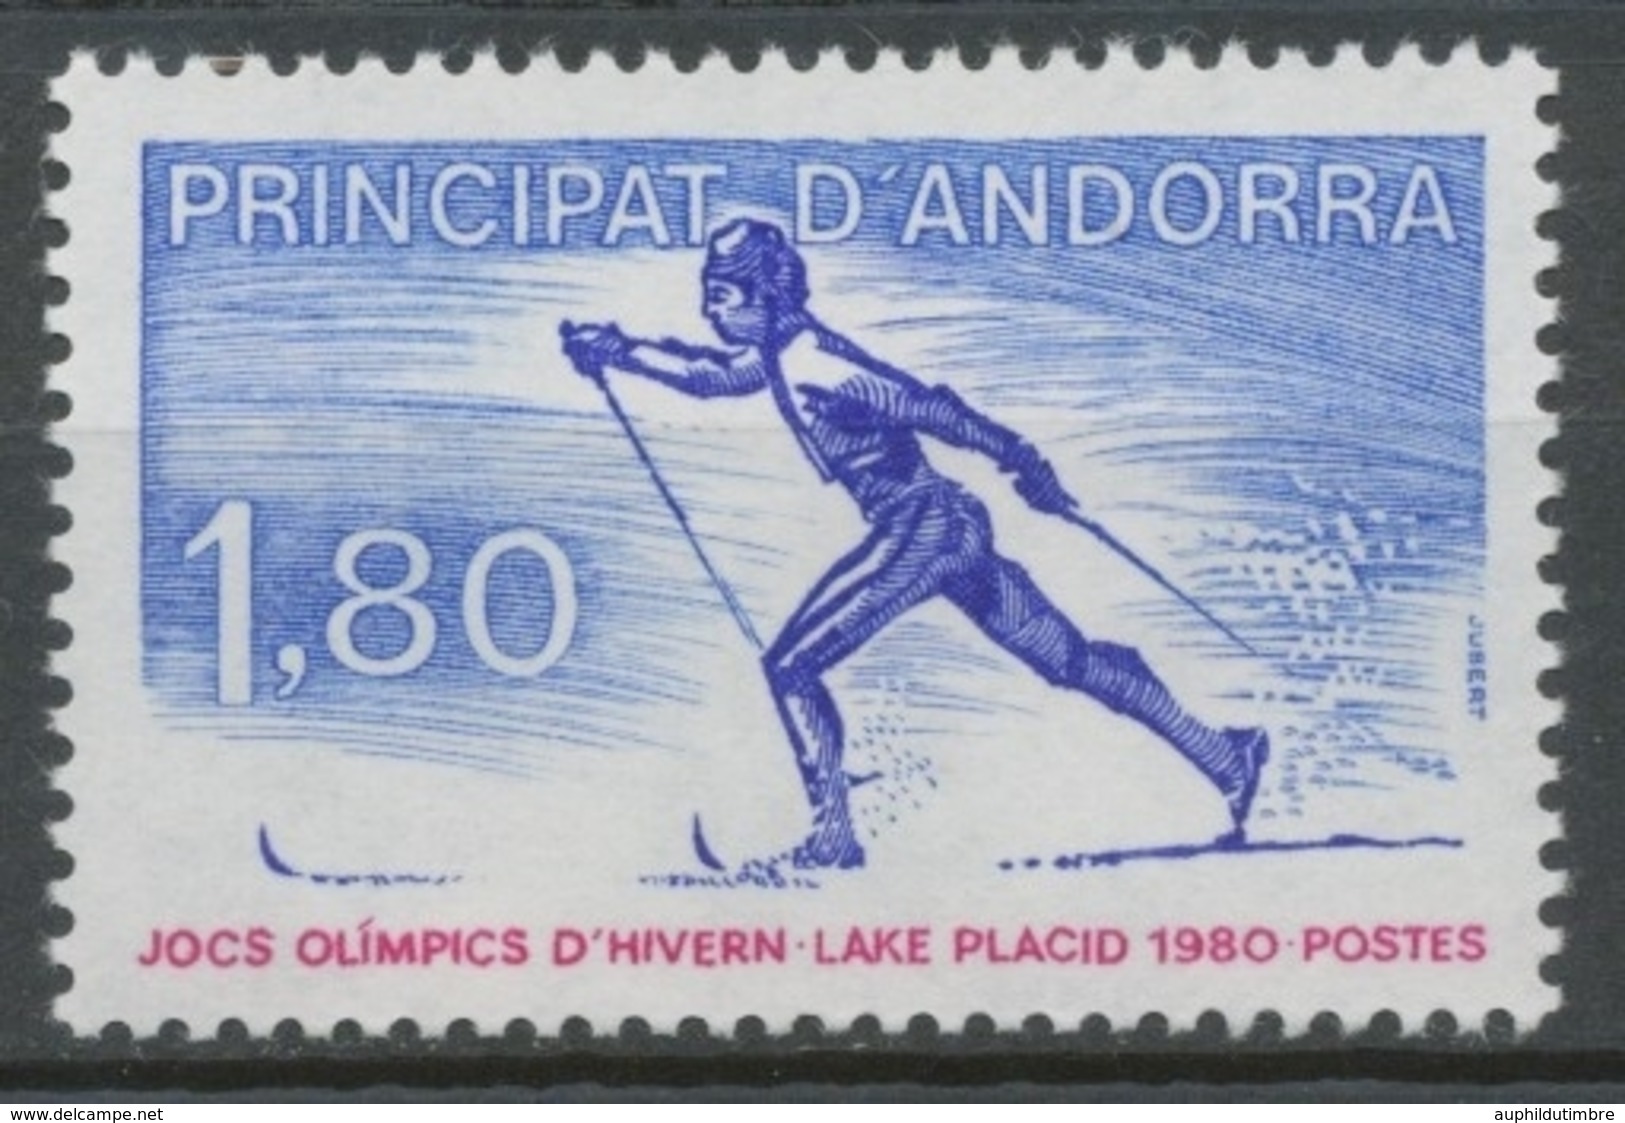 Andorre FR N°283 1f.80 Bleu/rge/outremer N** ZA283 - Unused Stamps